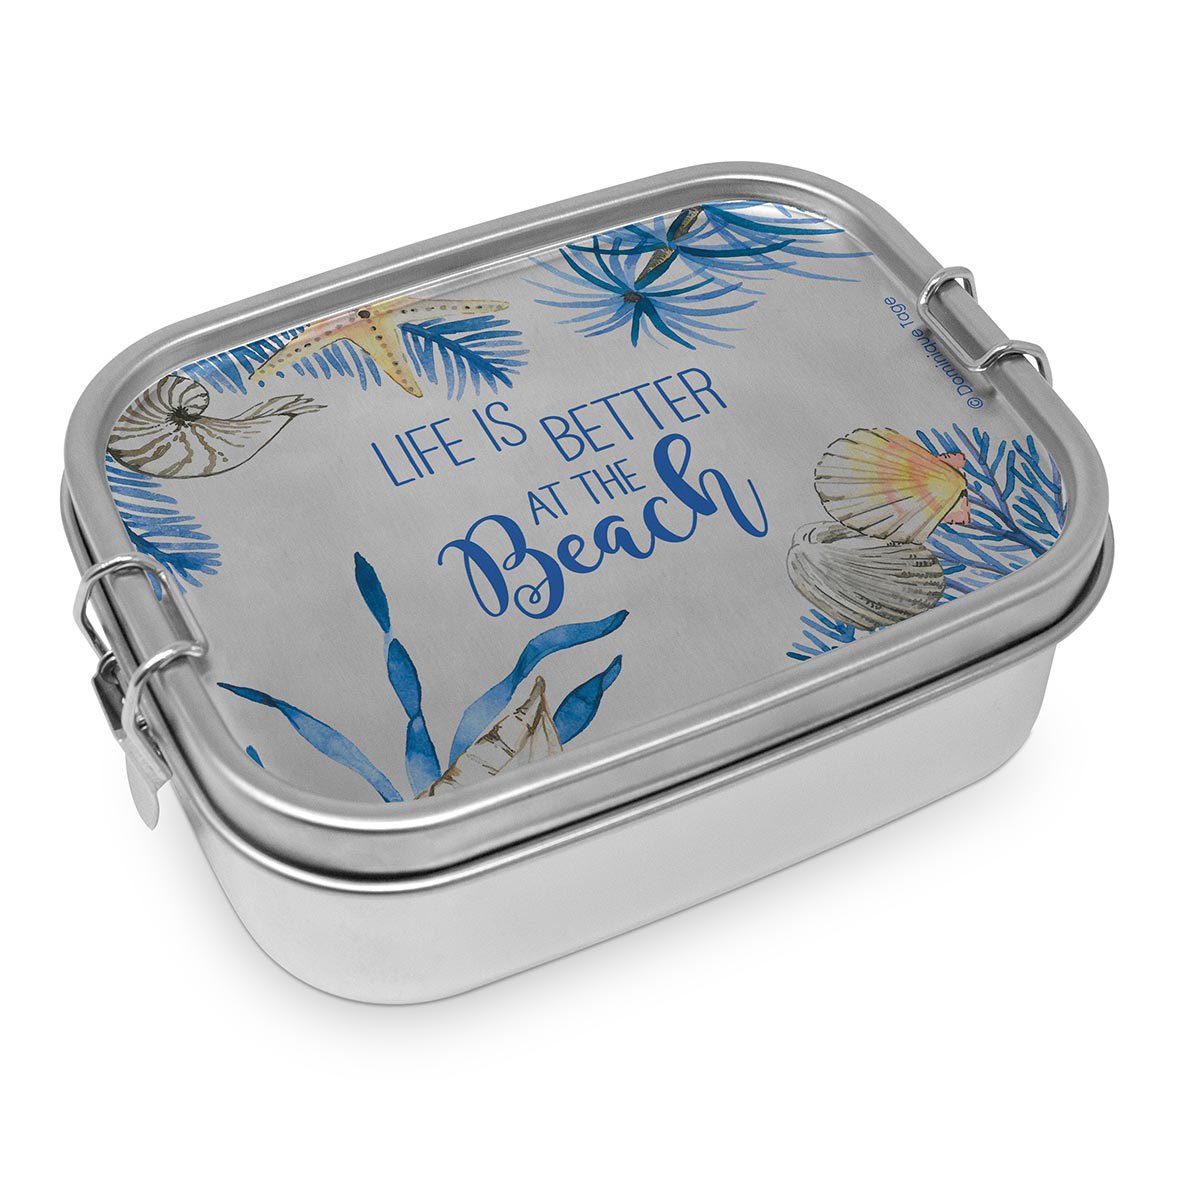 Ocean Life is better Steel Lunch Box